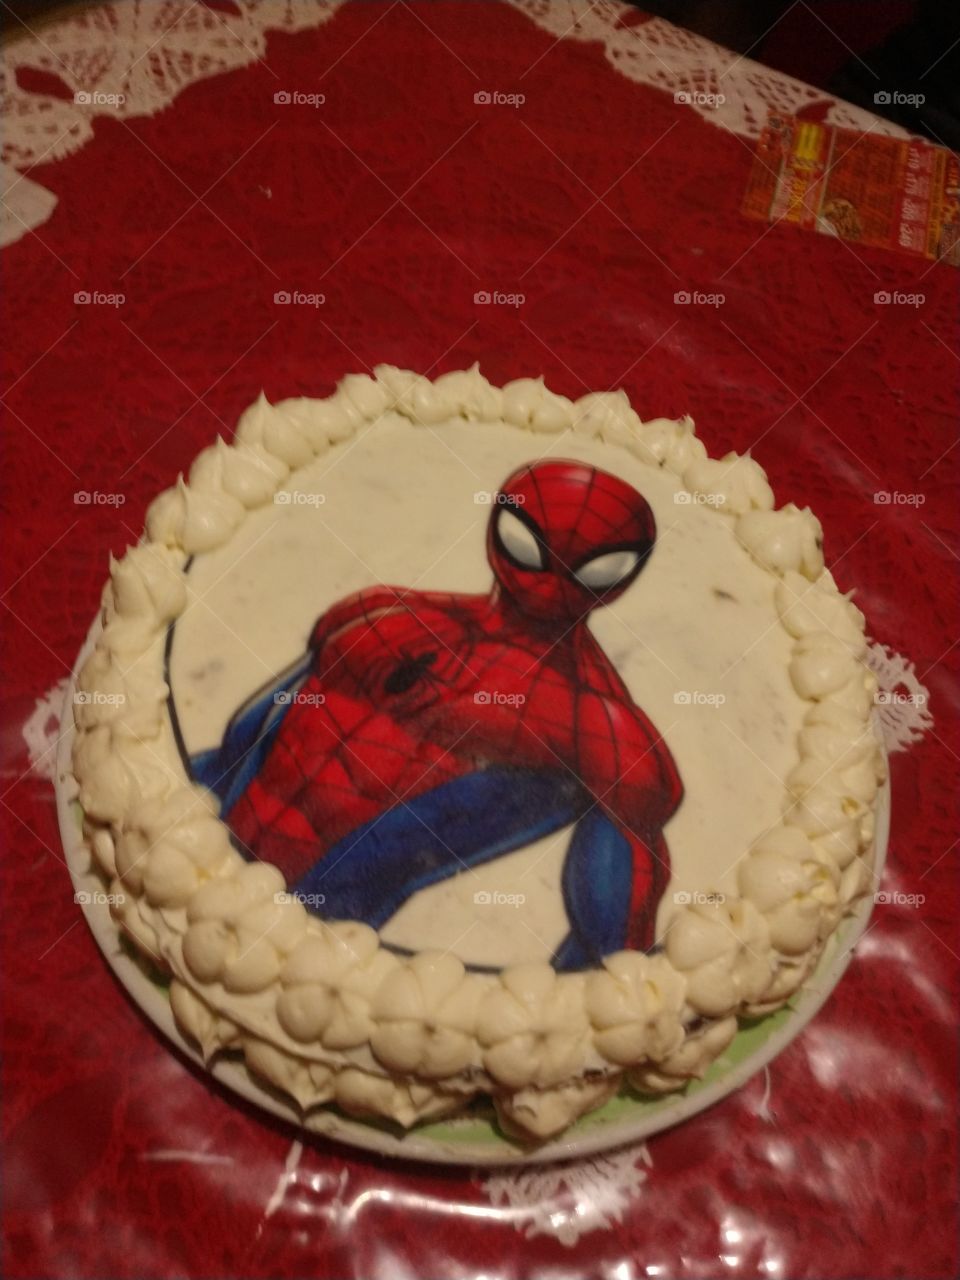 My birthday,spiderman.